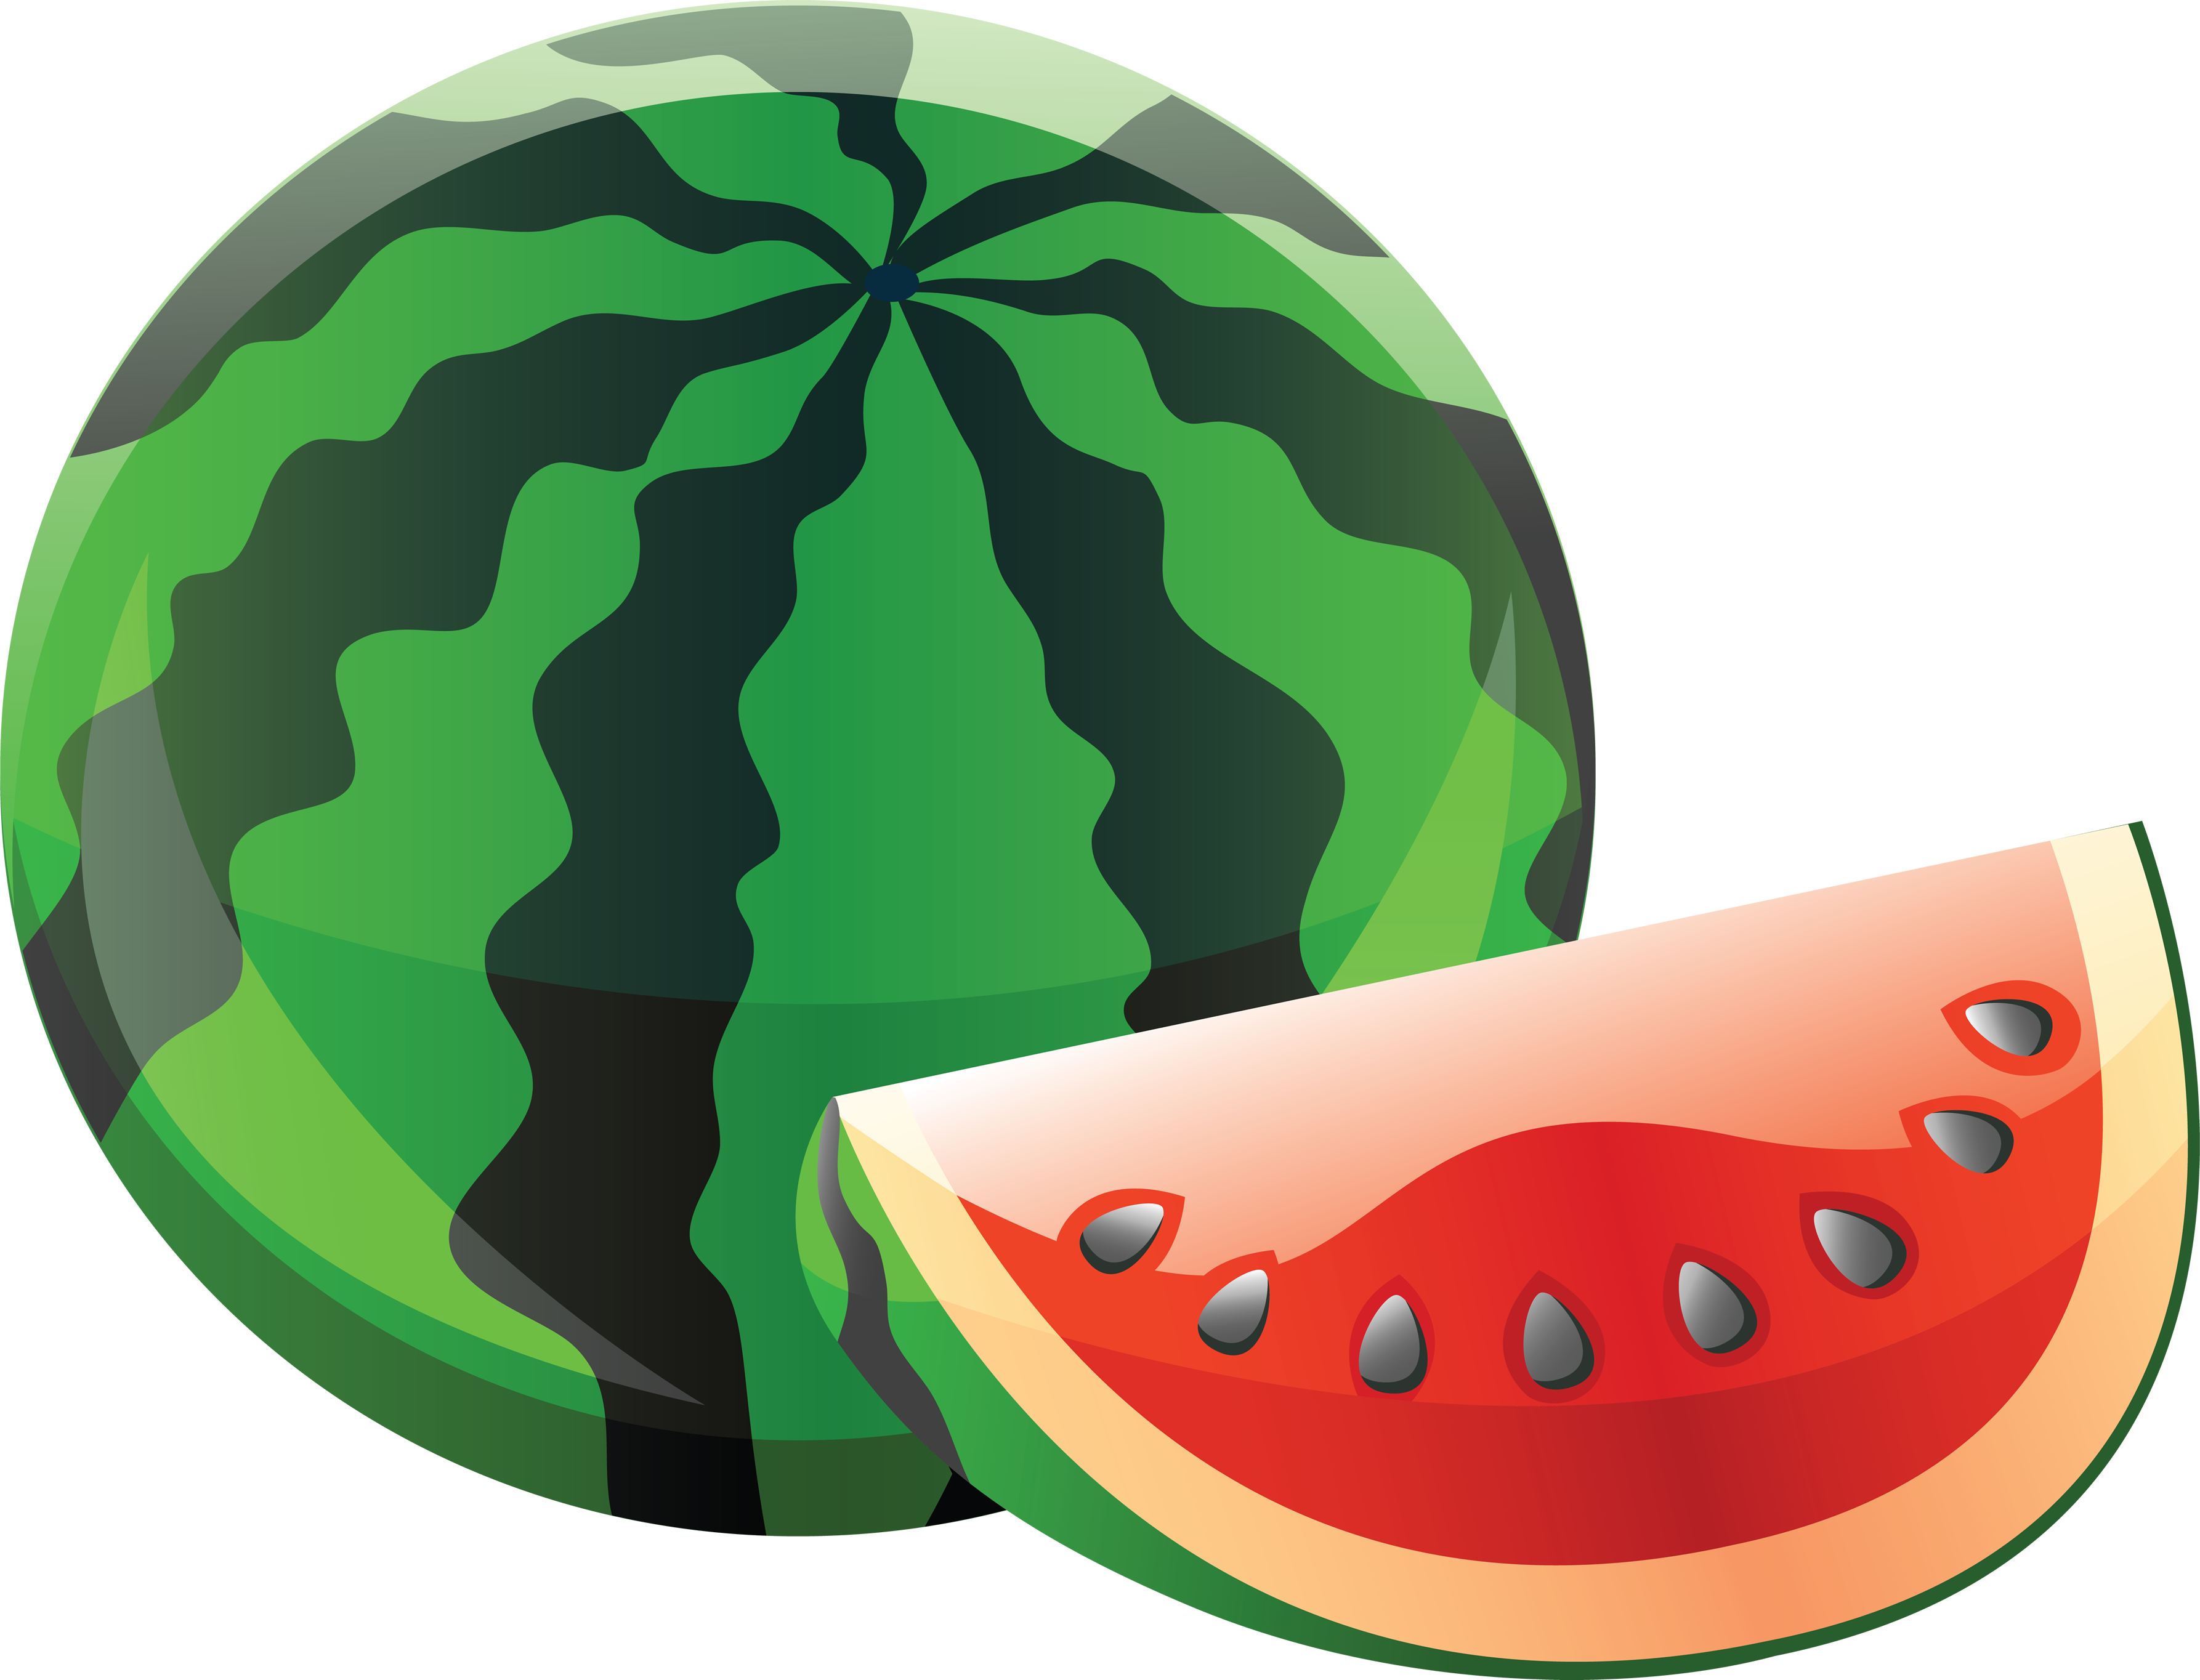 Watermelon clip art for kids